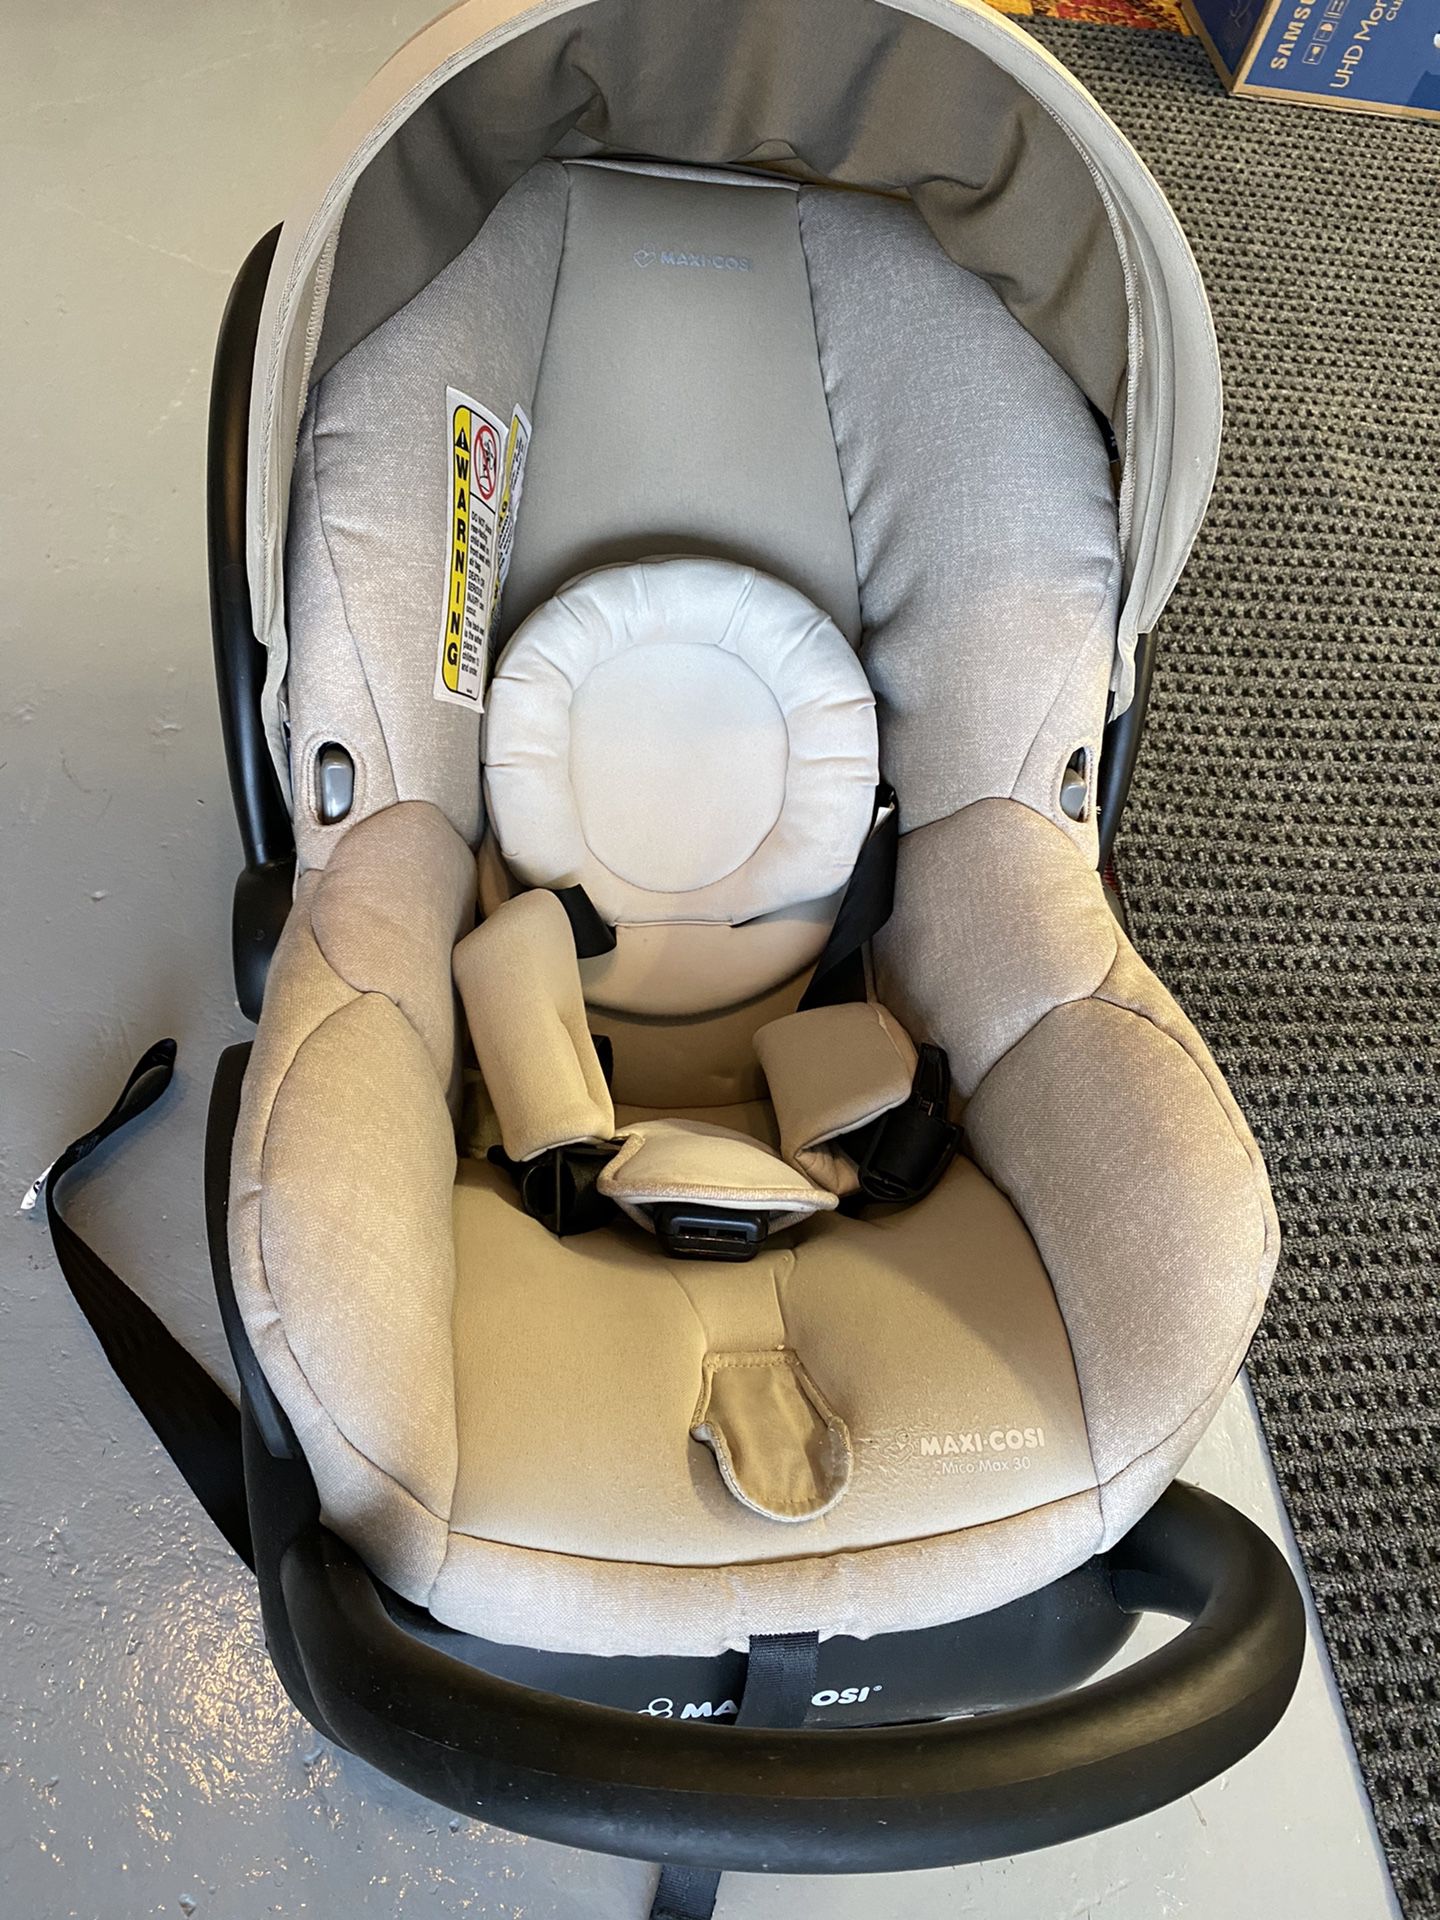 Maxi Cosi Mico Max 30 Infant Car Seat